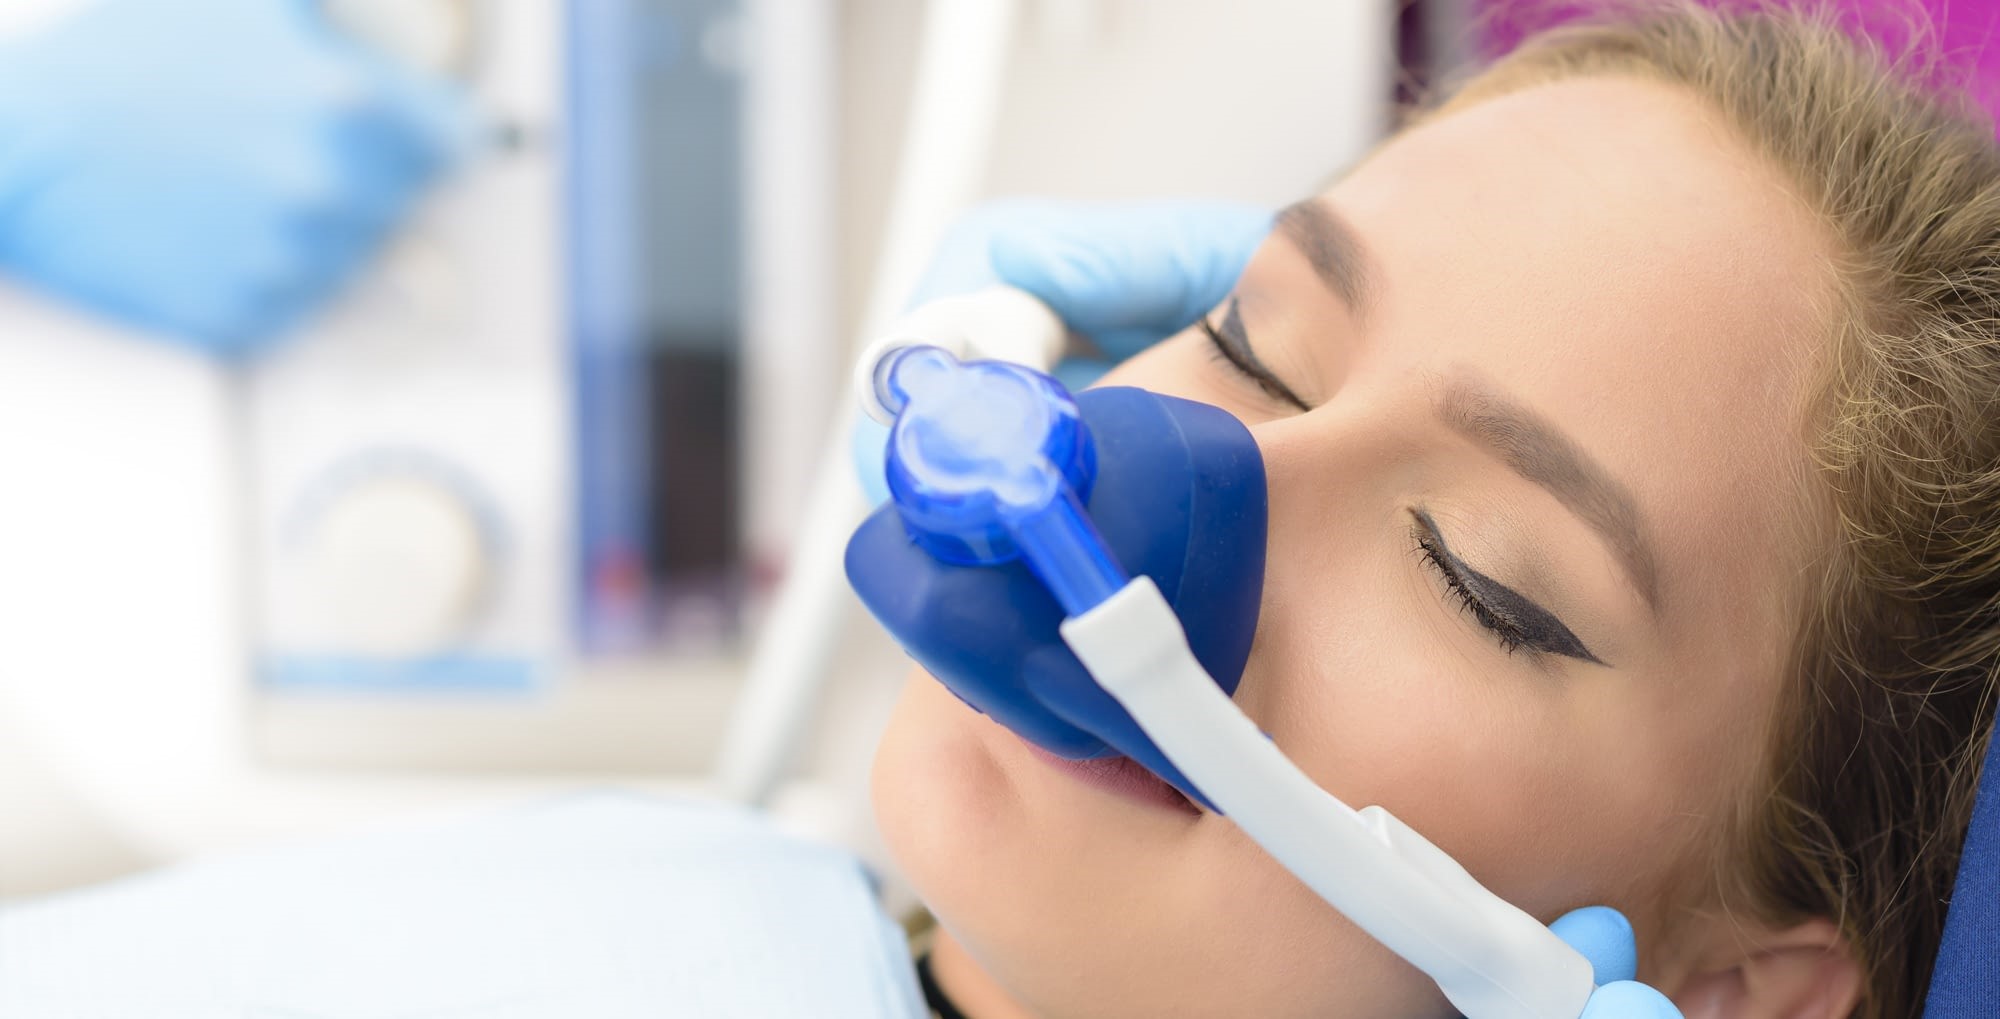 Nitrous oxide sedation in dentistry